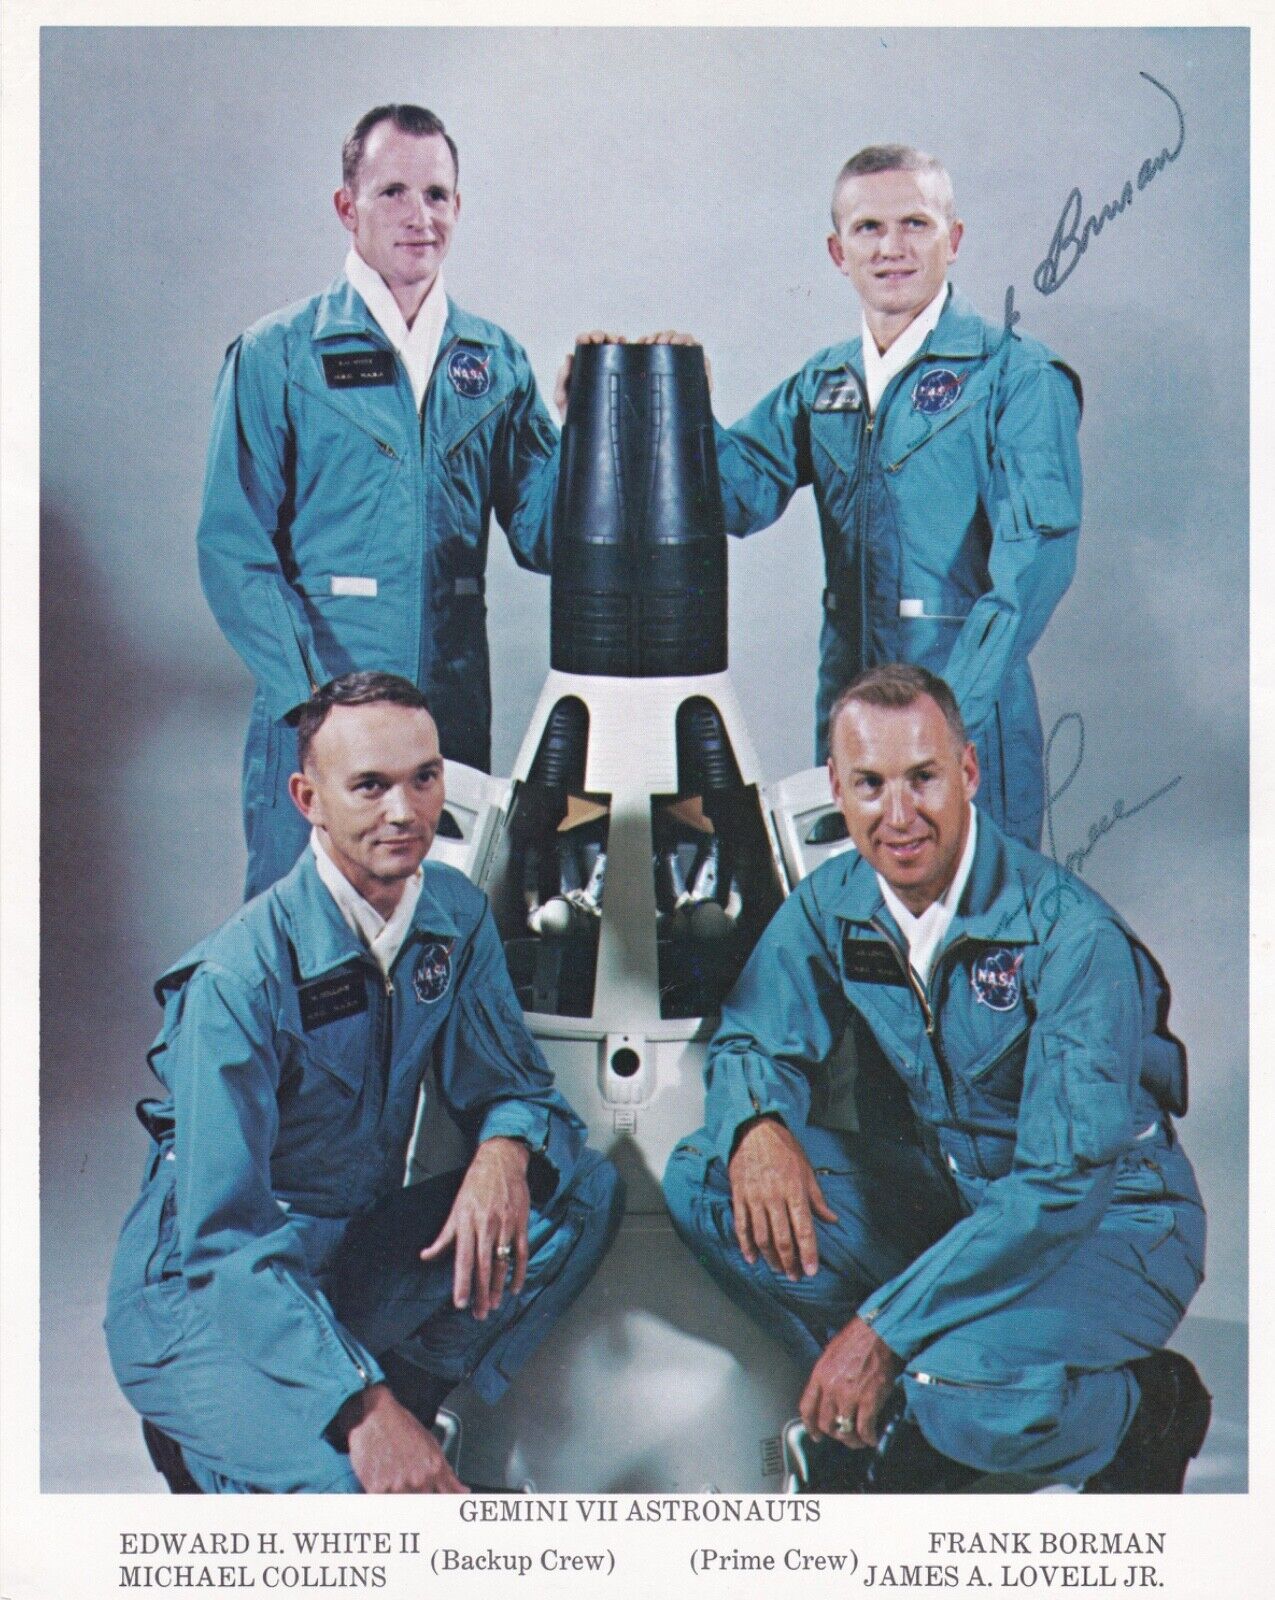 Frank Borman and James Lovell “Signed” Gemini VII Photograph